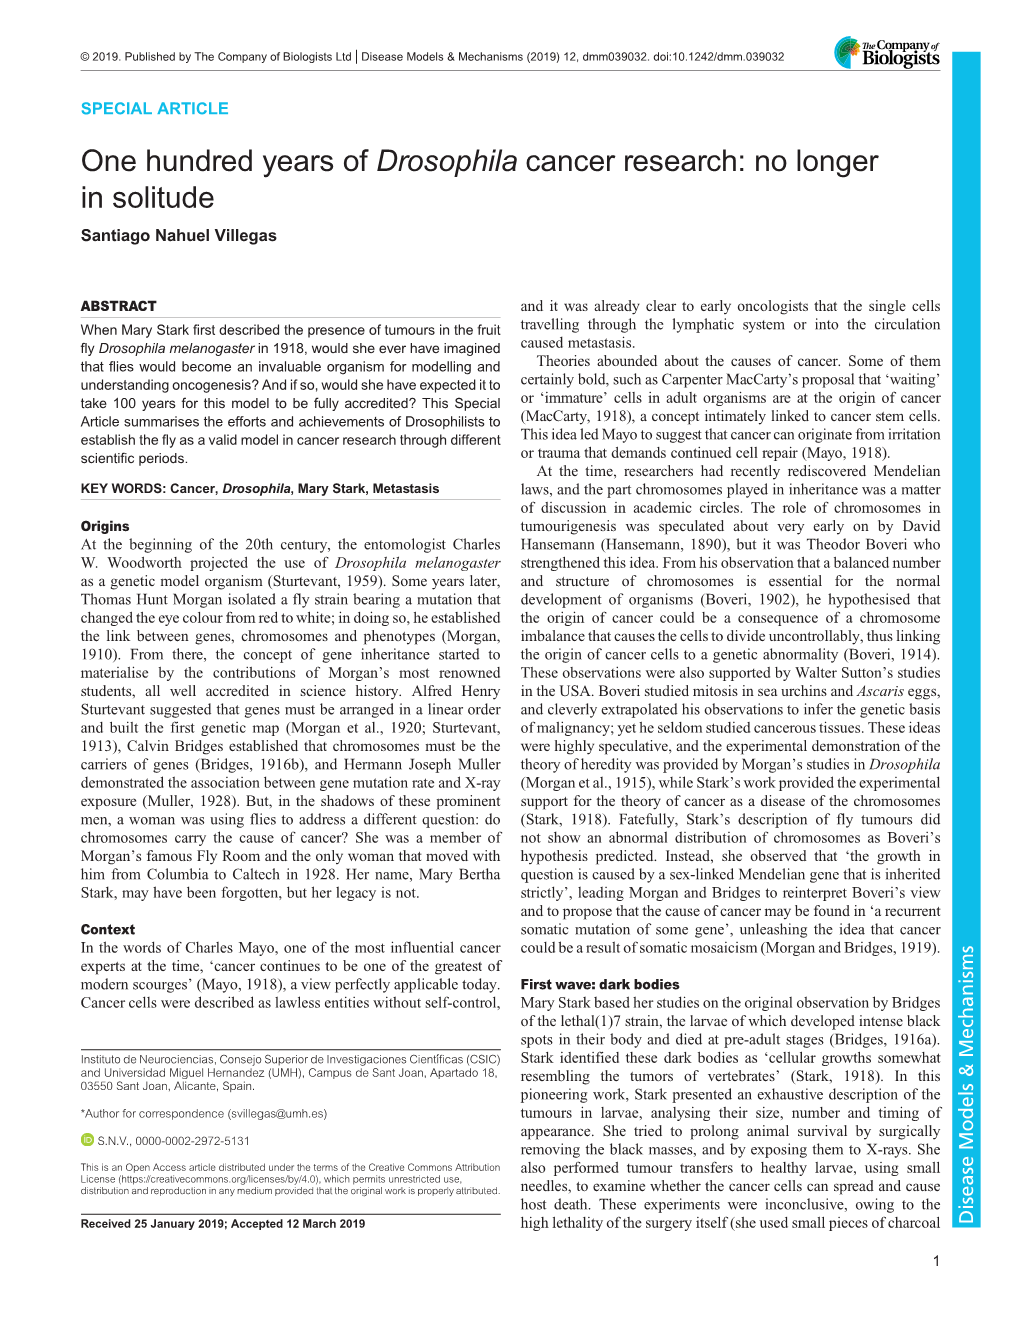 One Hundred Years of Drosophila Cancer Research: No Longer in Solitude Santiago Nahuel Villegas